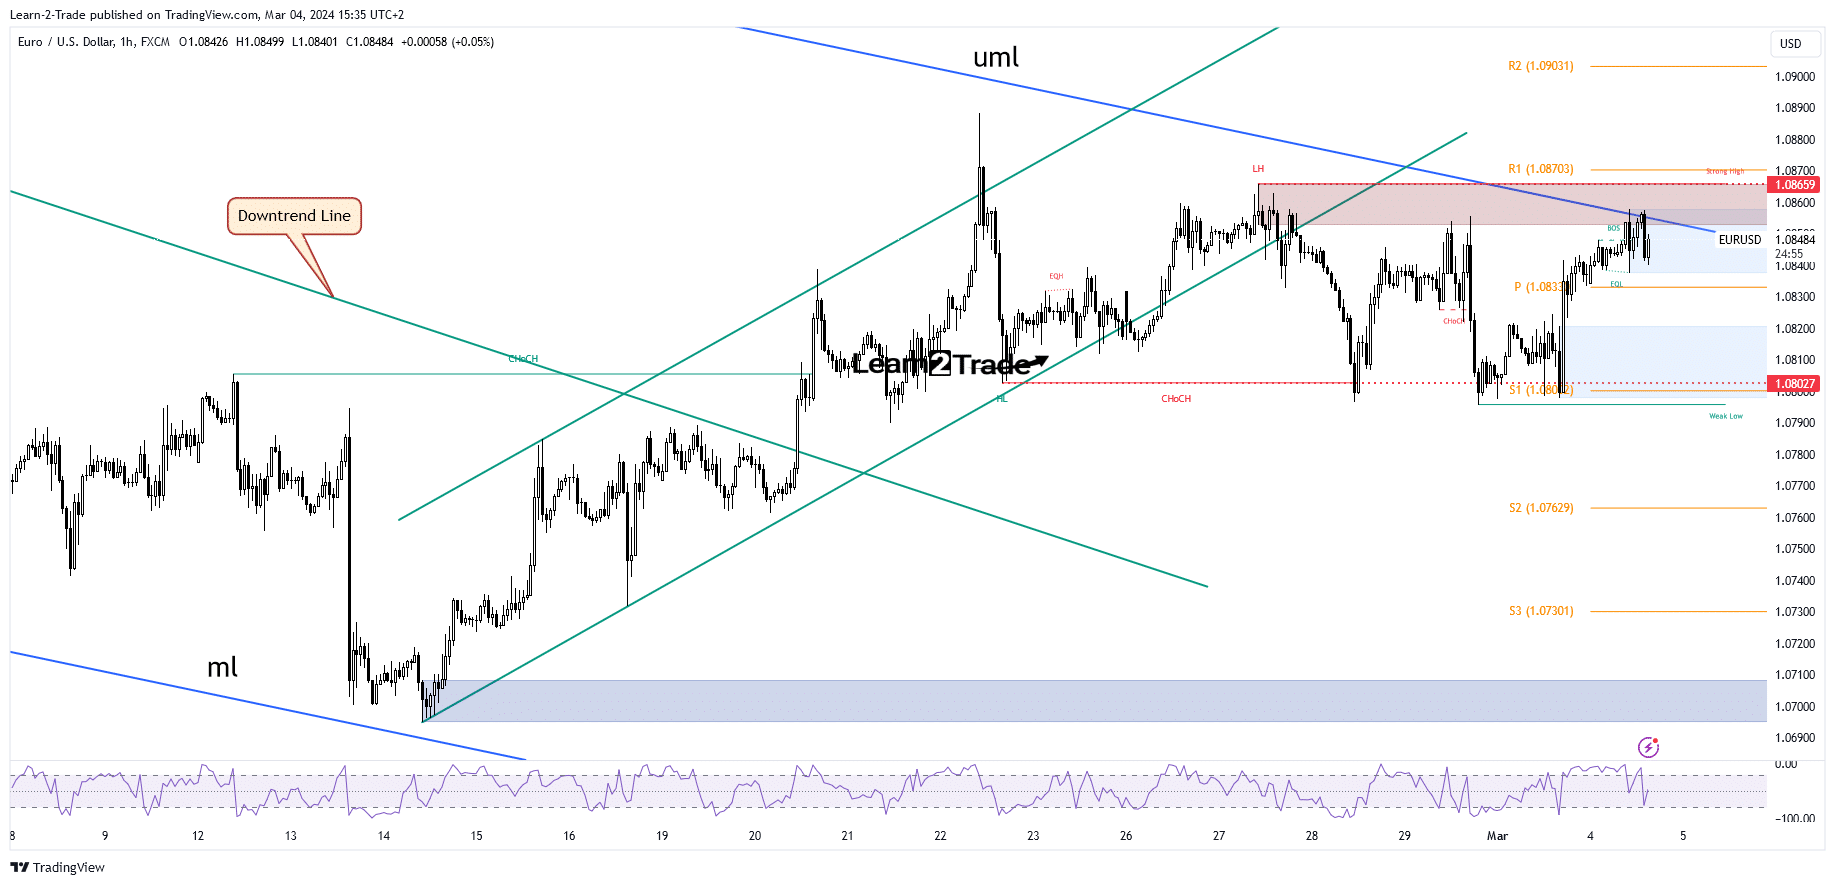 EUR/USD price